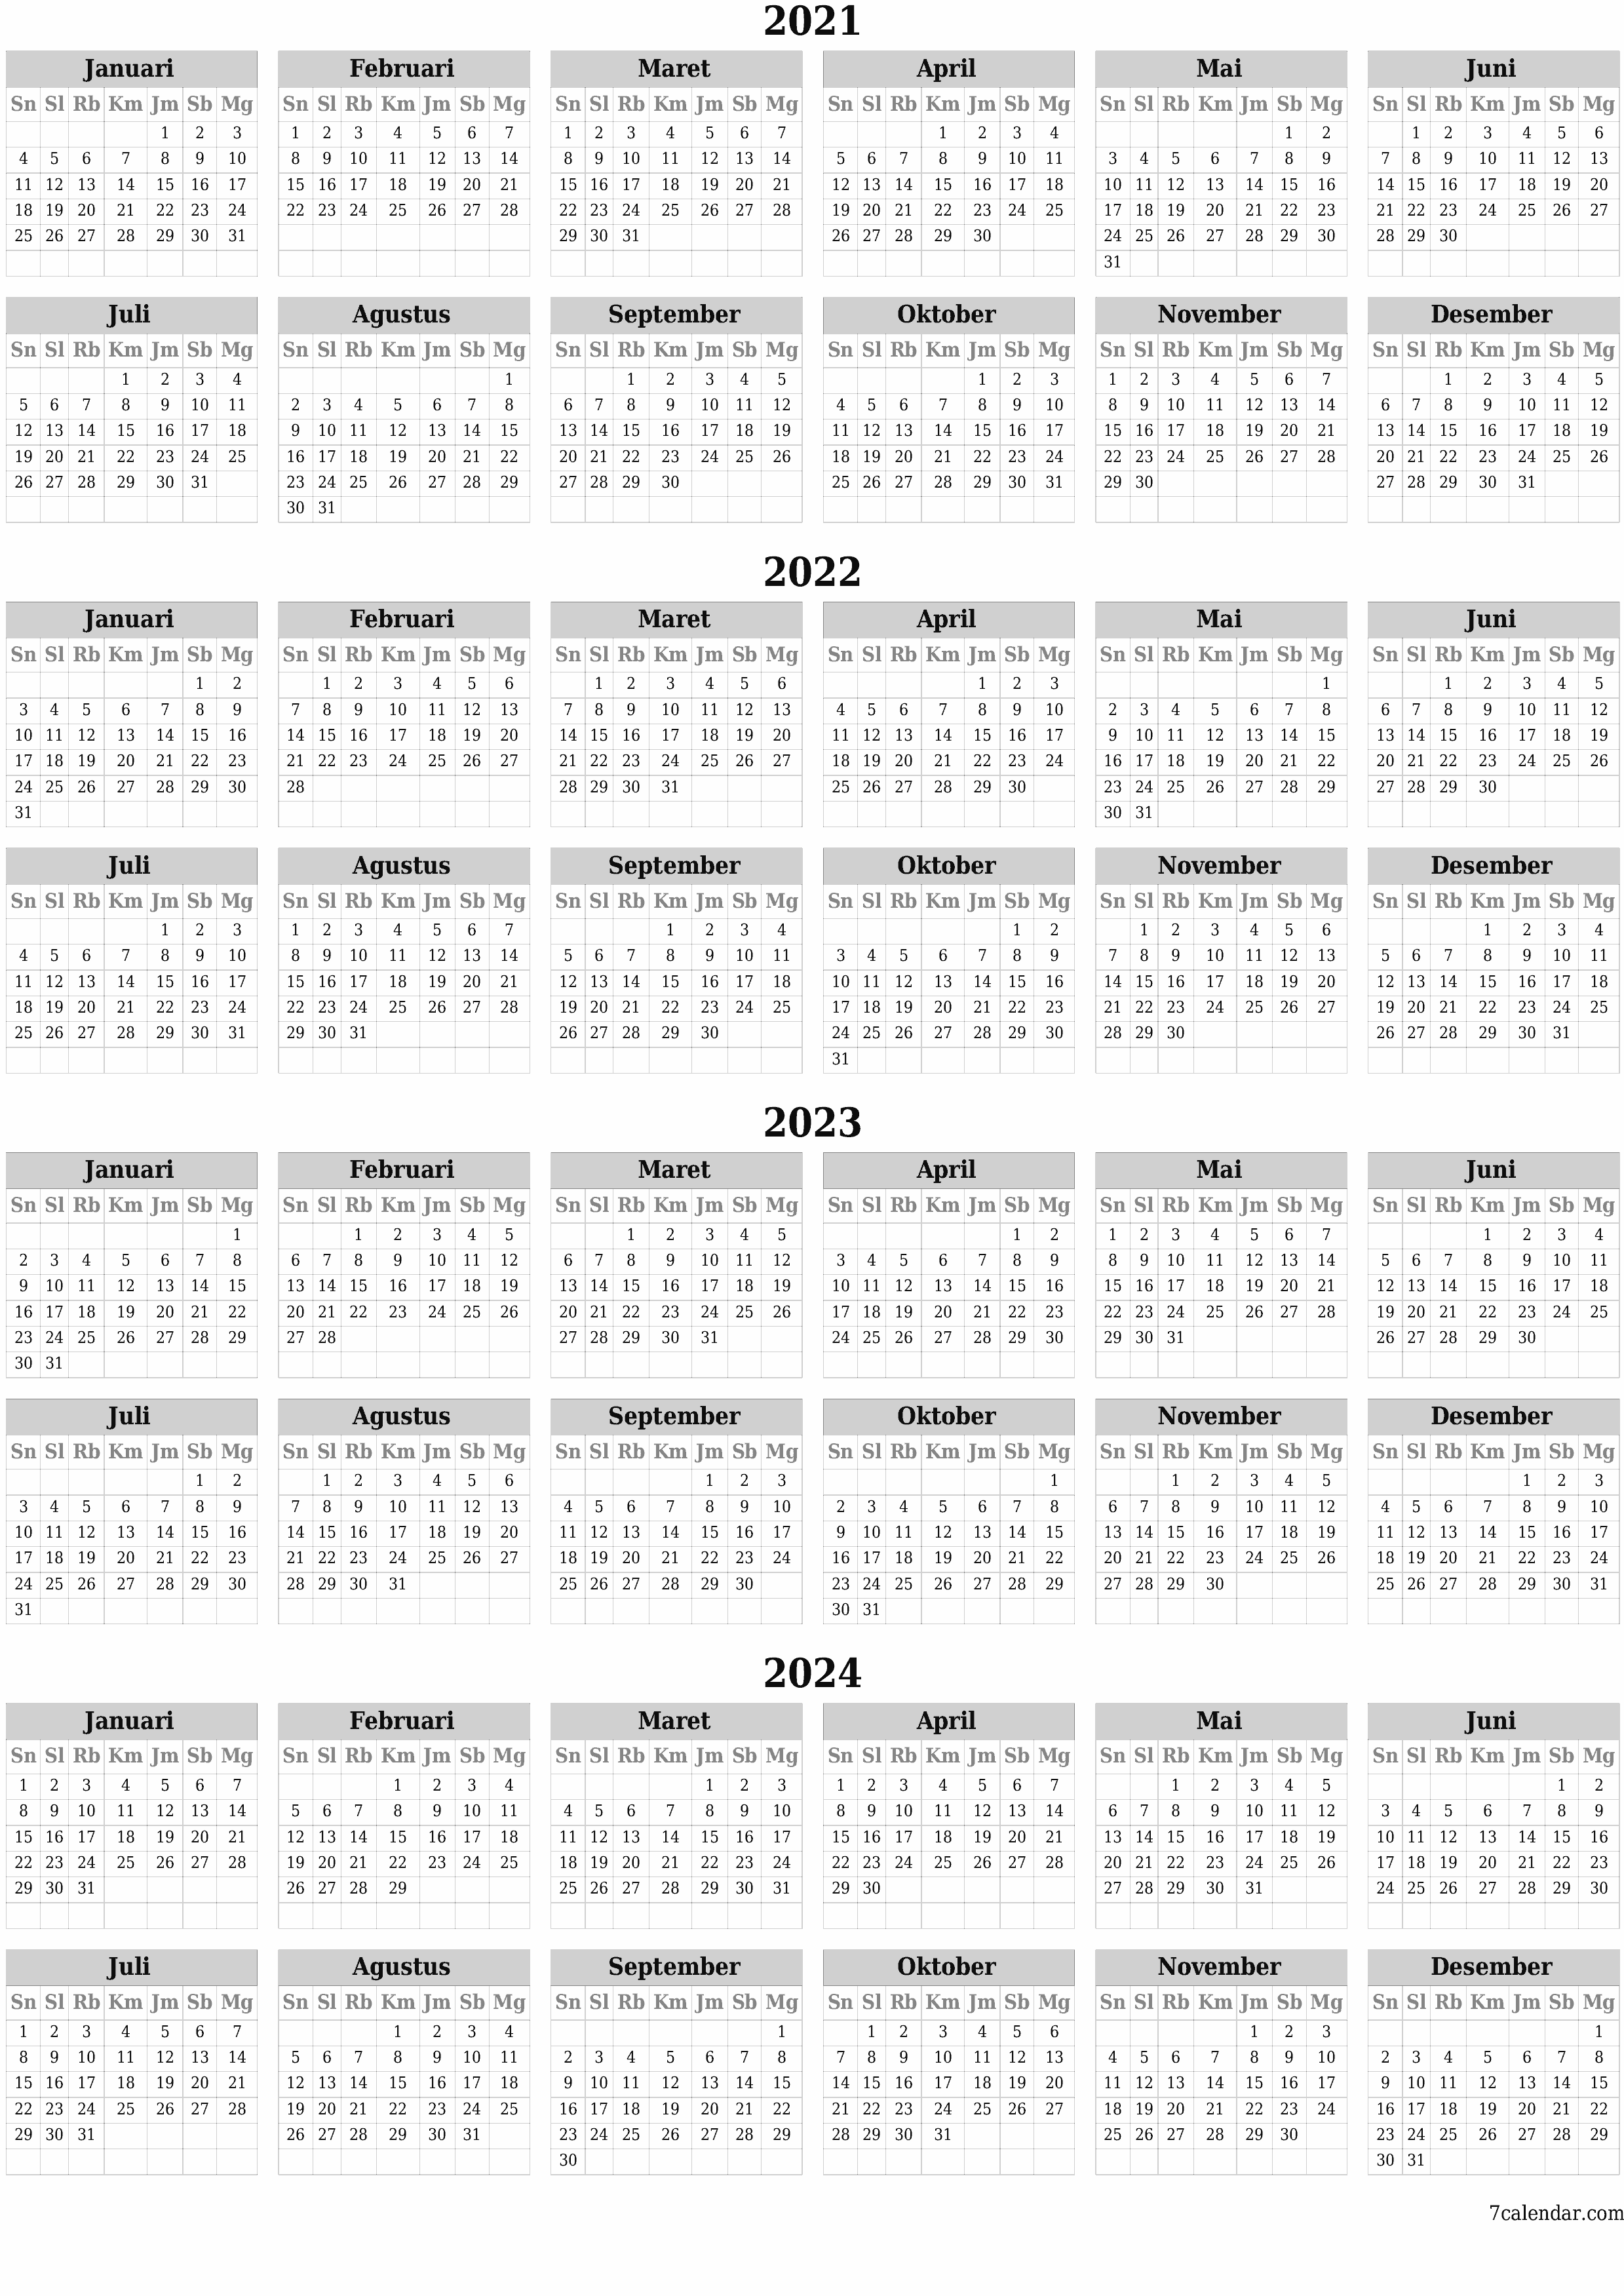  yang dapat dicetak dinding templat gratisvertikal Tahunan kalender Maret (Mar) 2021